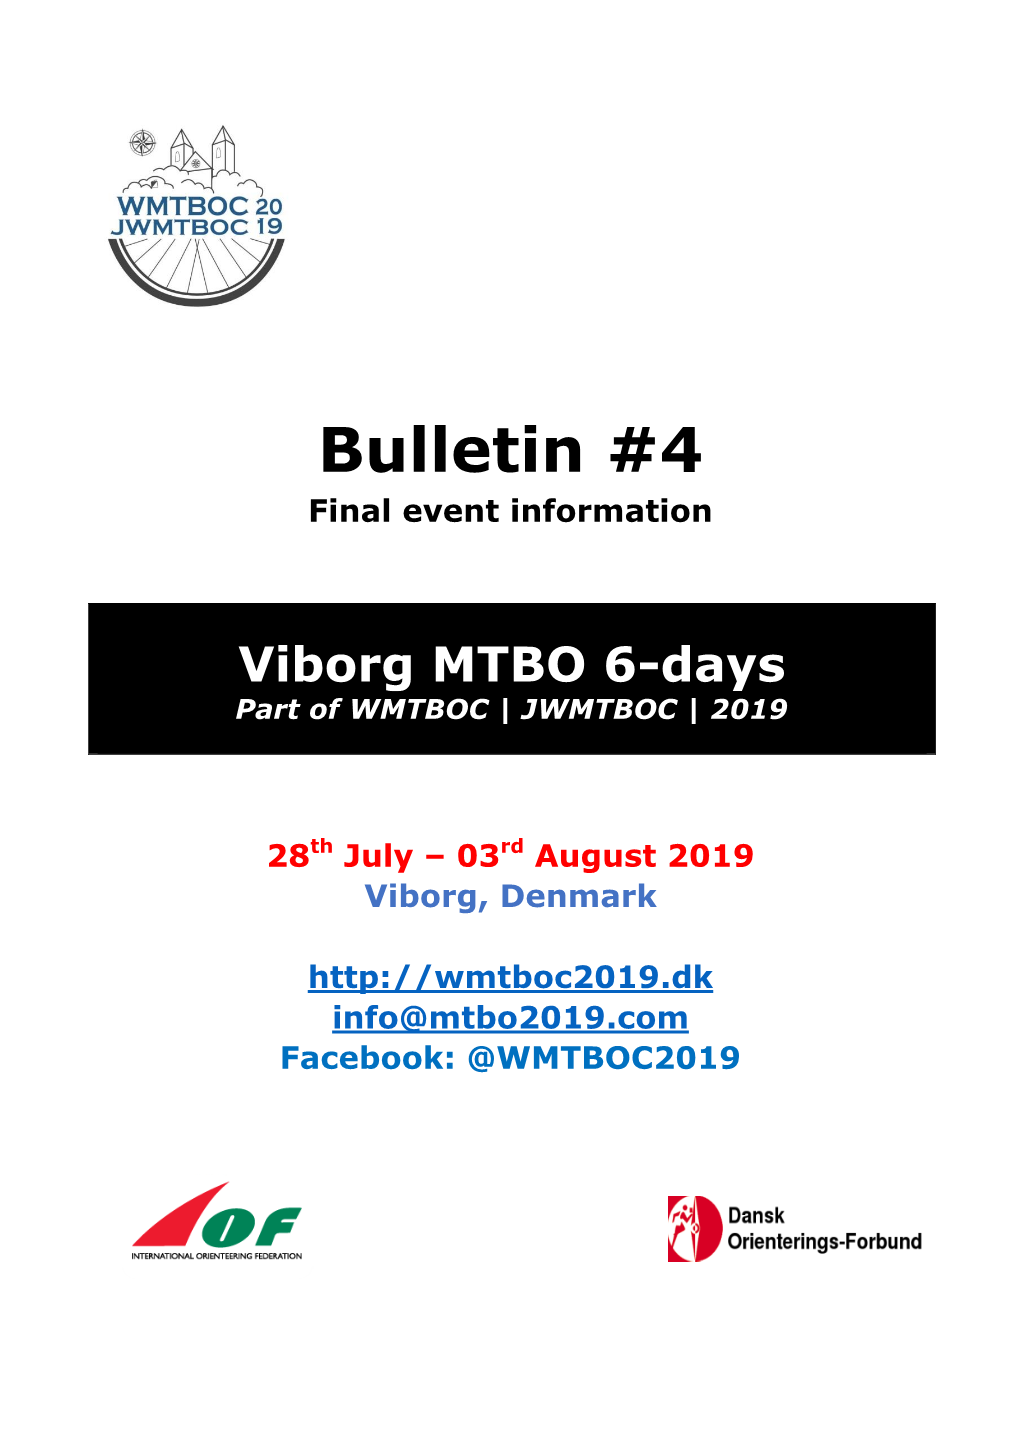 Bulletin #4 Final Event Information